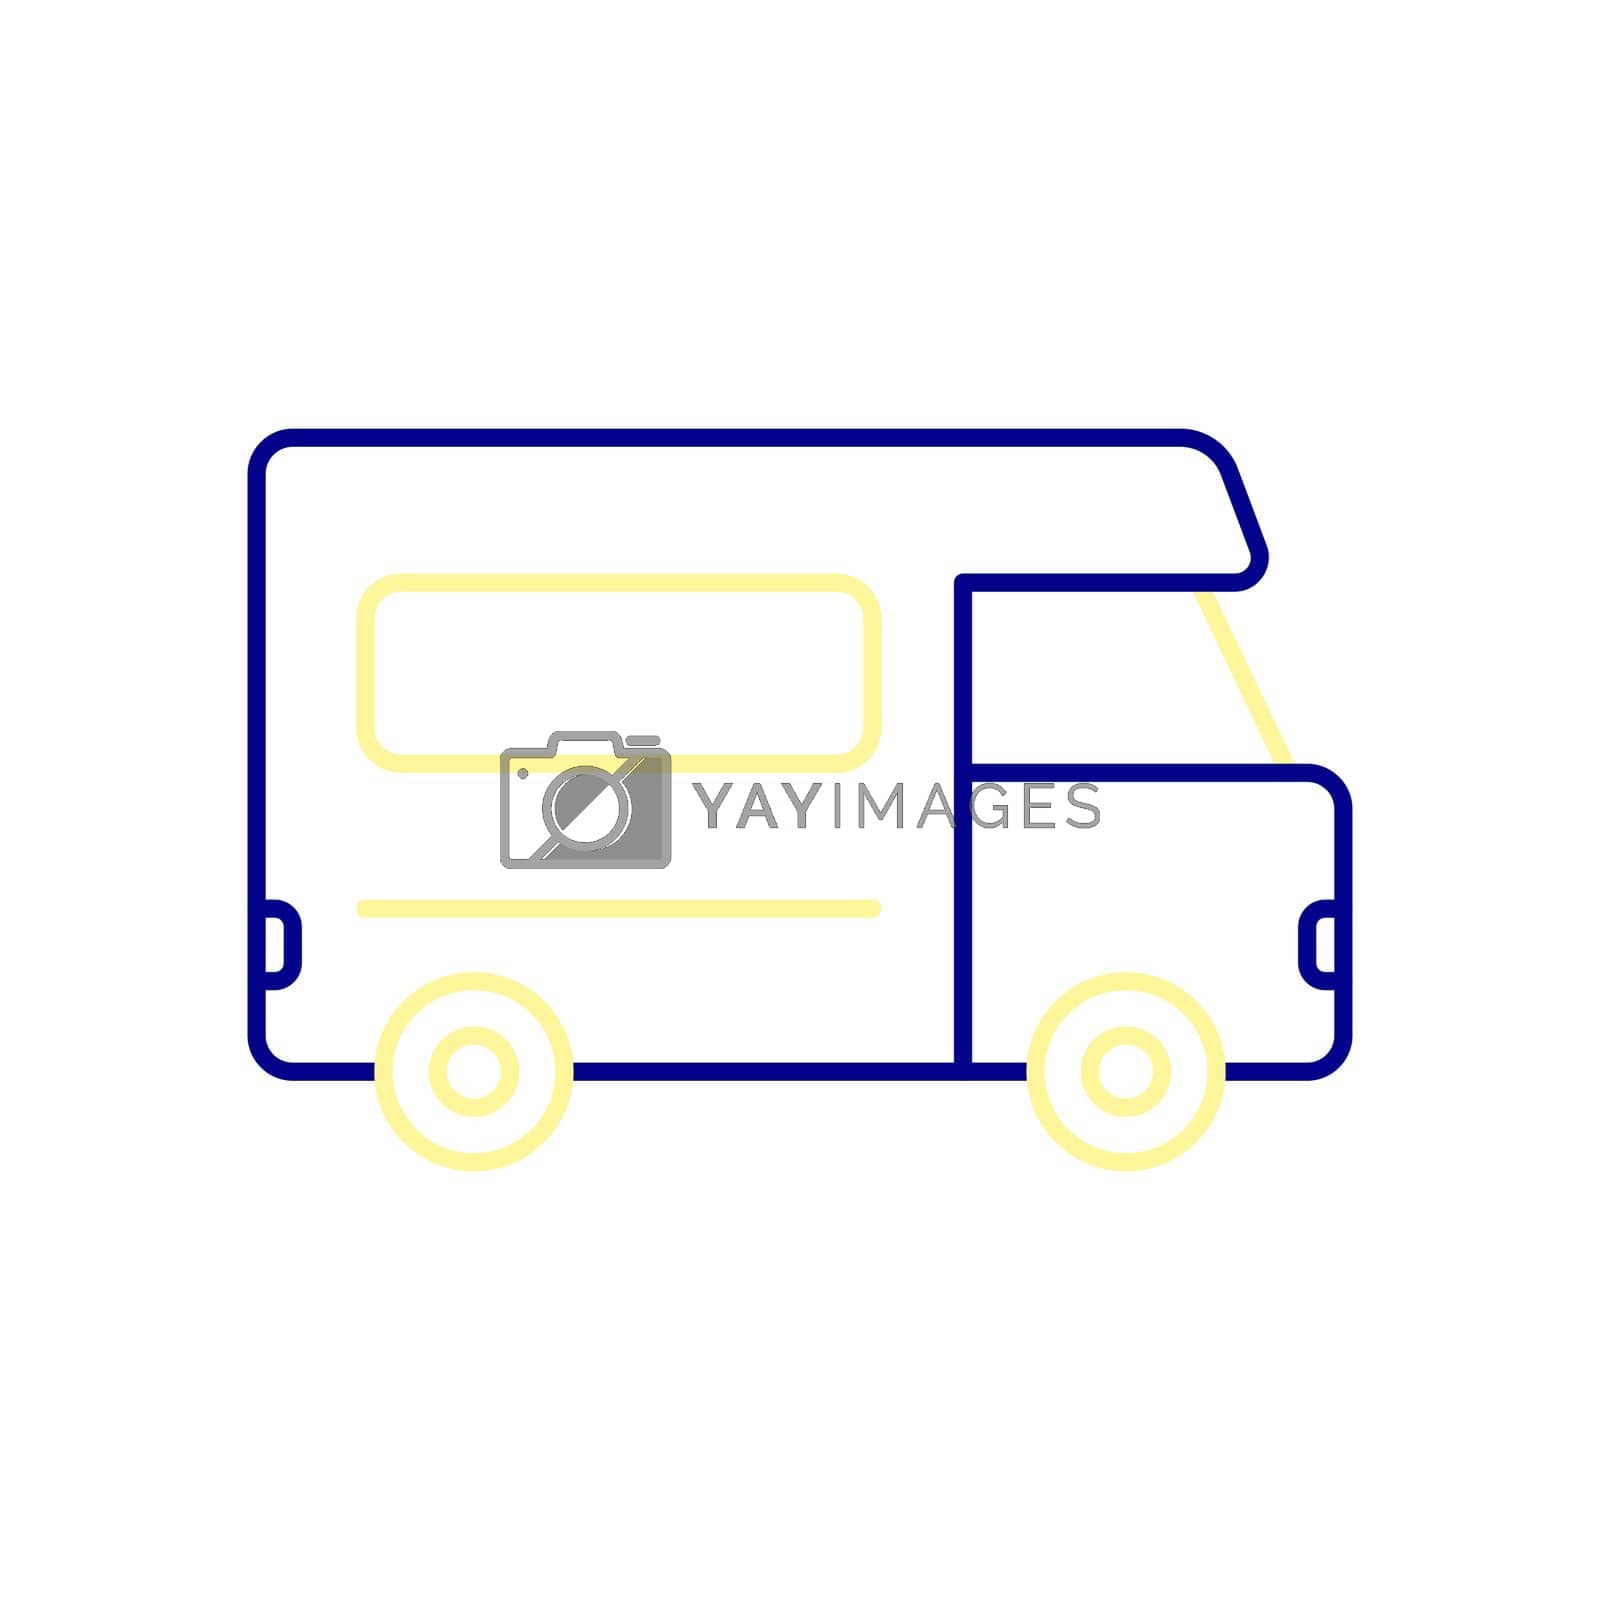 Royalty free image of Van Icon, Travel Leisurely in a Van. by adityaslogos